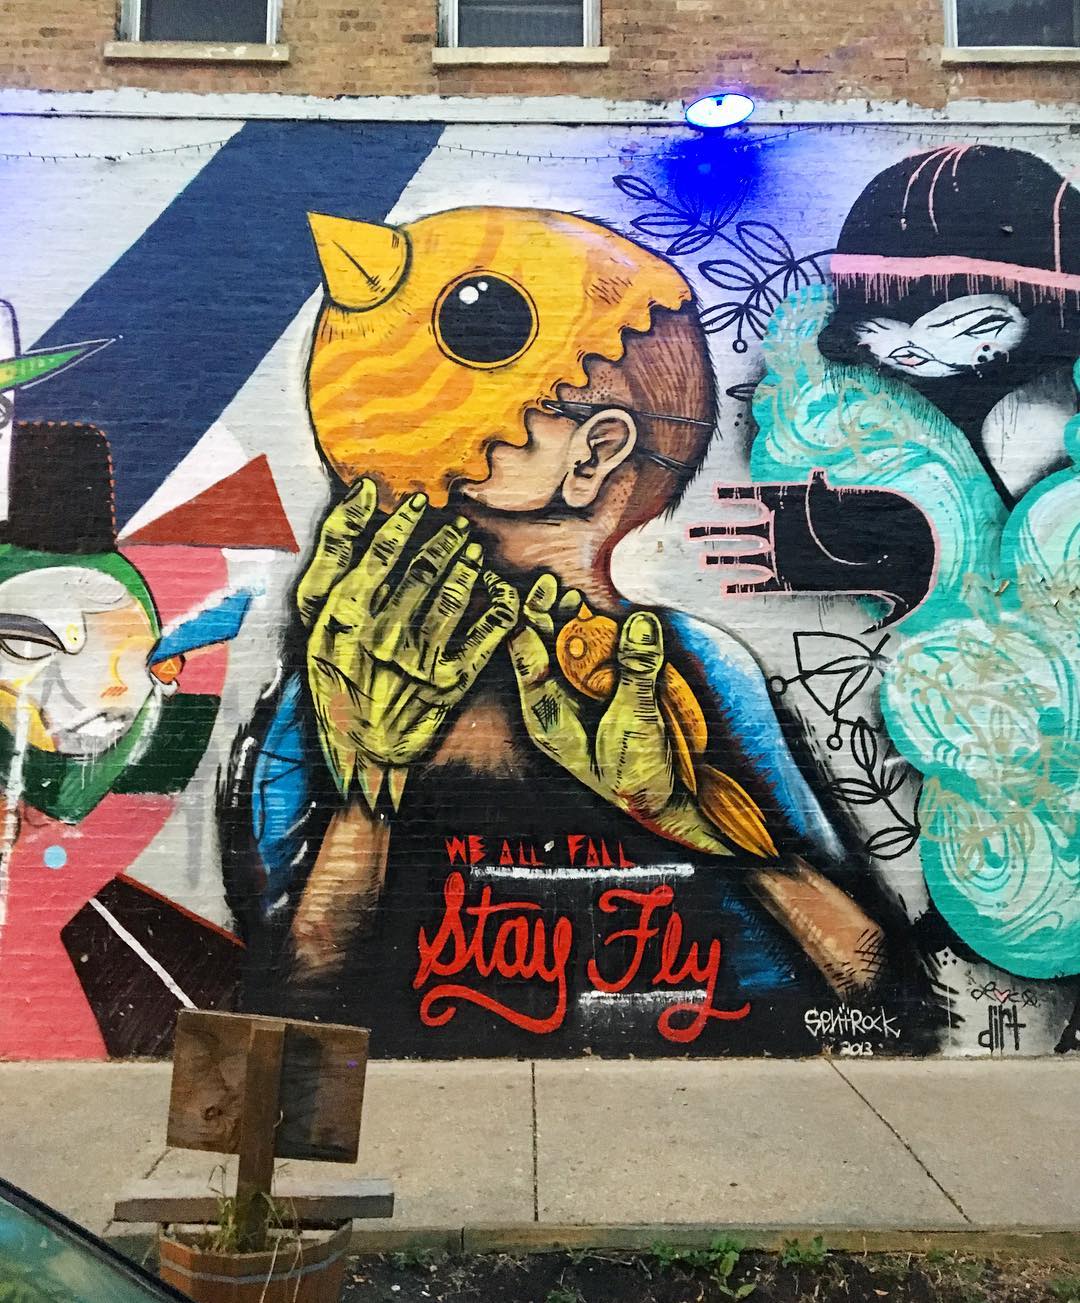 mural in Chicago by artist Sentrock.